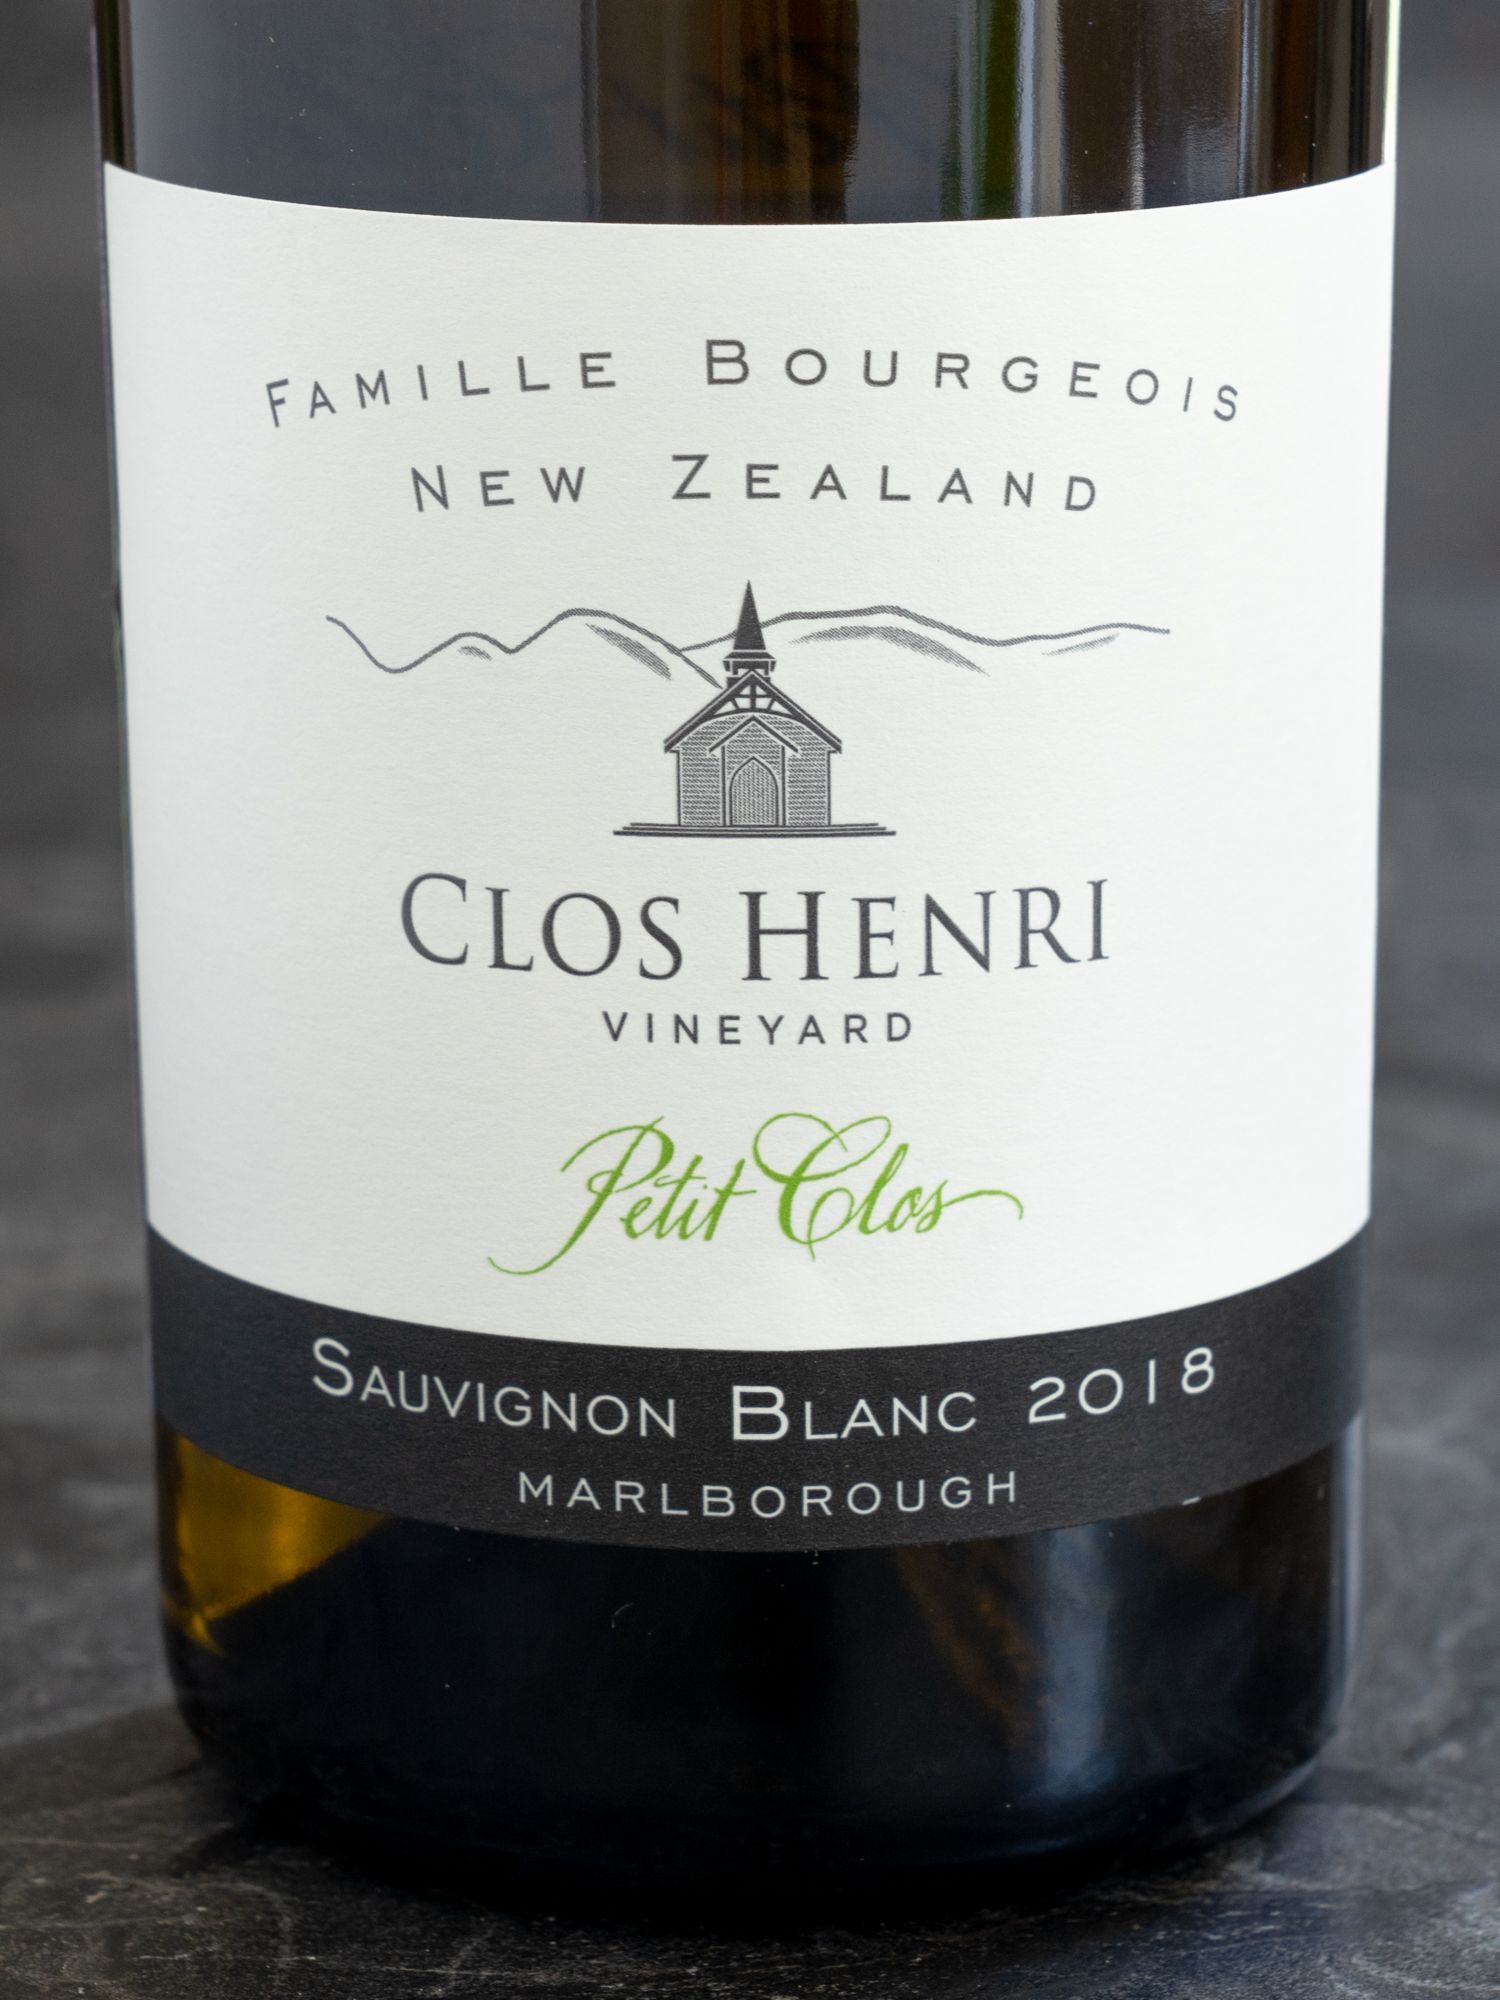 Вино Petit Clos Sauvignon Blanc Marlborough / Пти Кло Совиньон Блан Мальборо